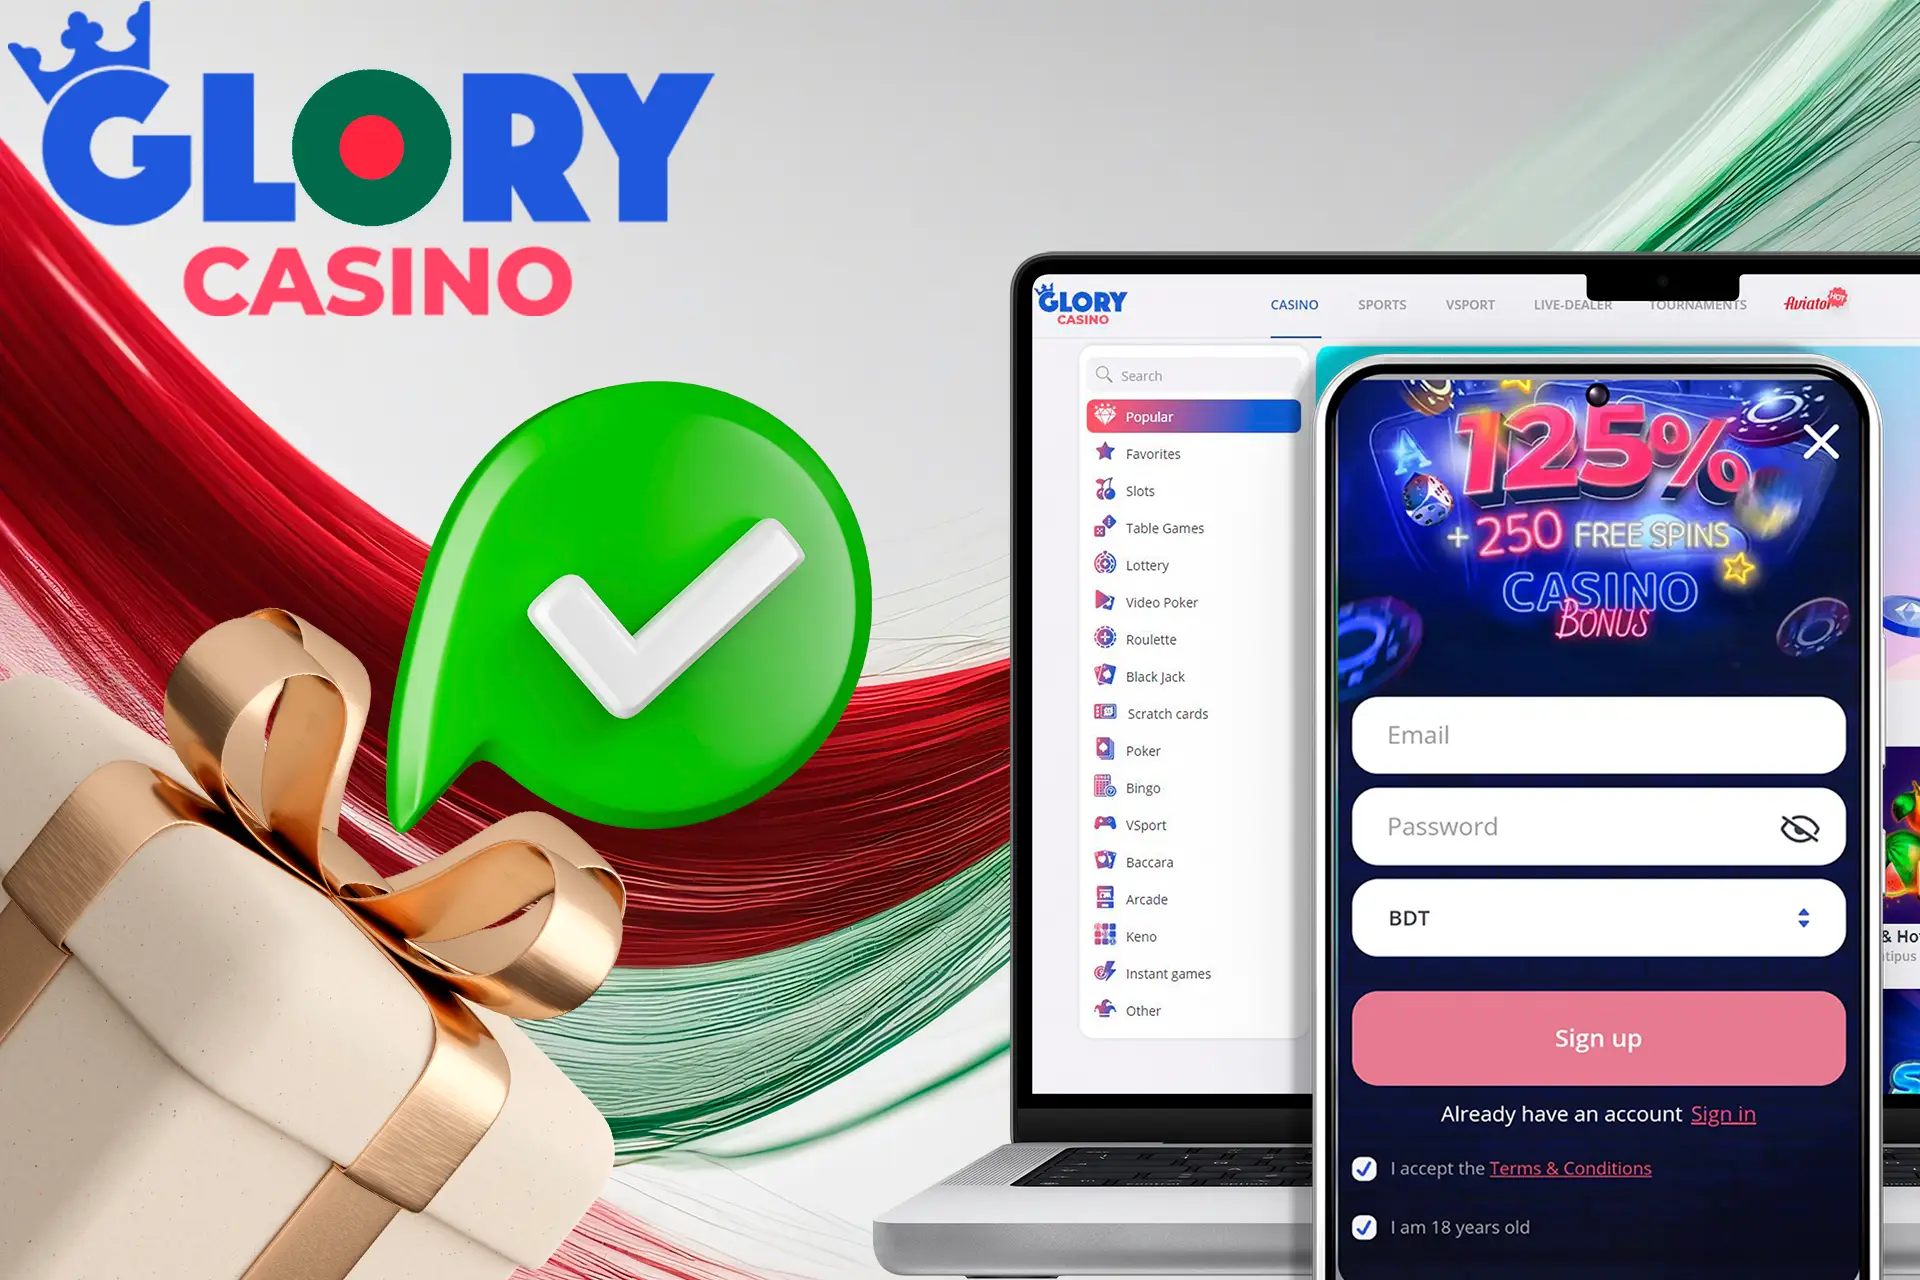 Register at Glory Casino Bangladesh and receive your welcome bonus